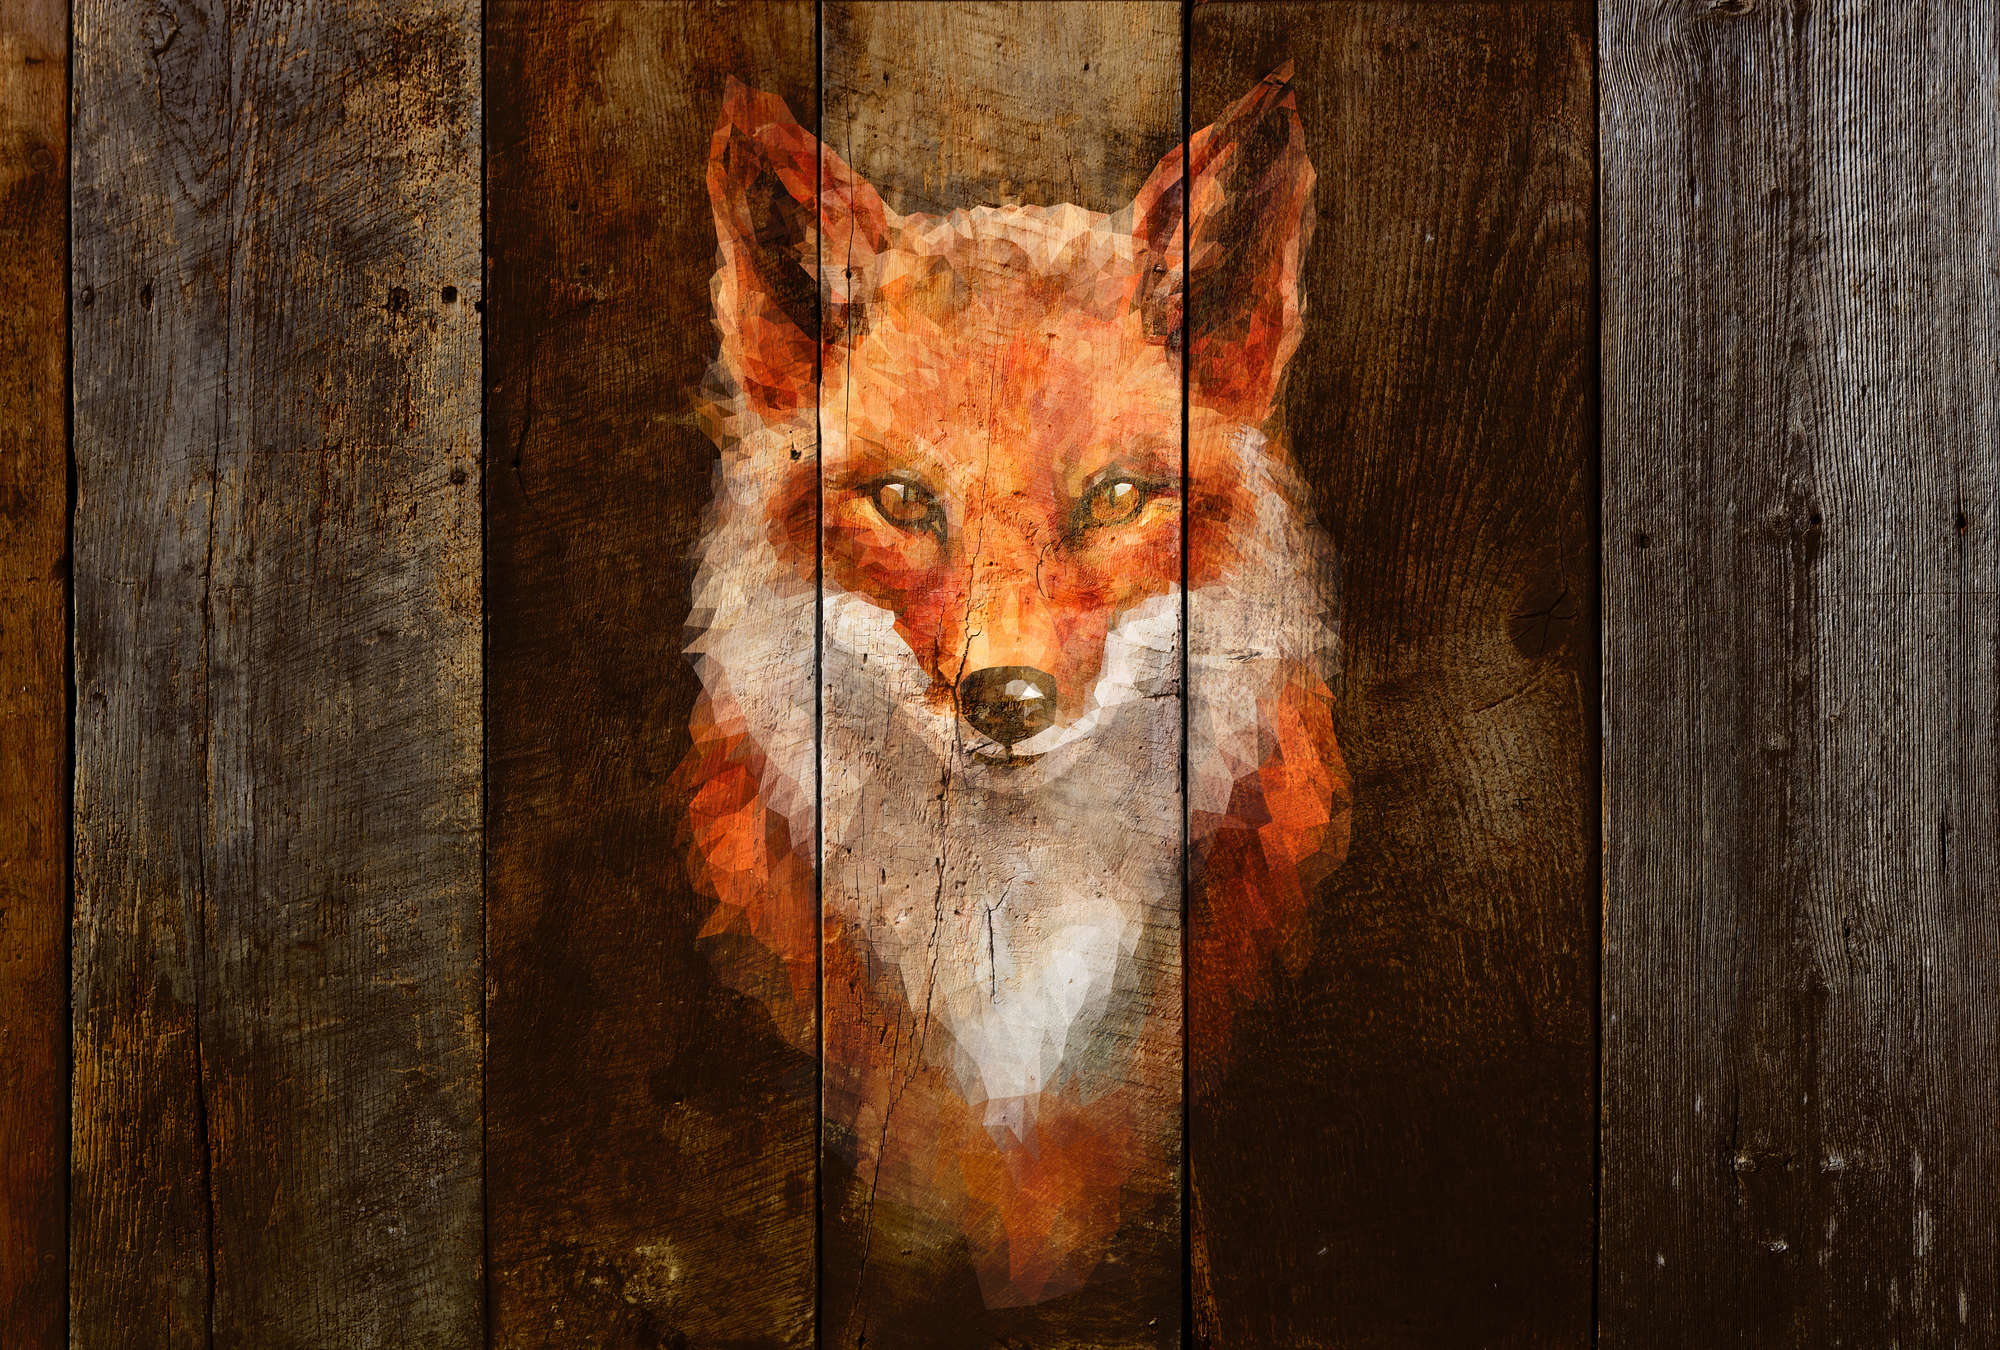             Photo wallpaper fox & wood look with polygon design - orange, brown, white
        